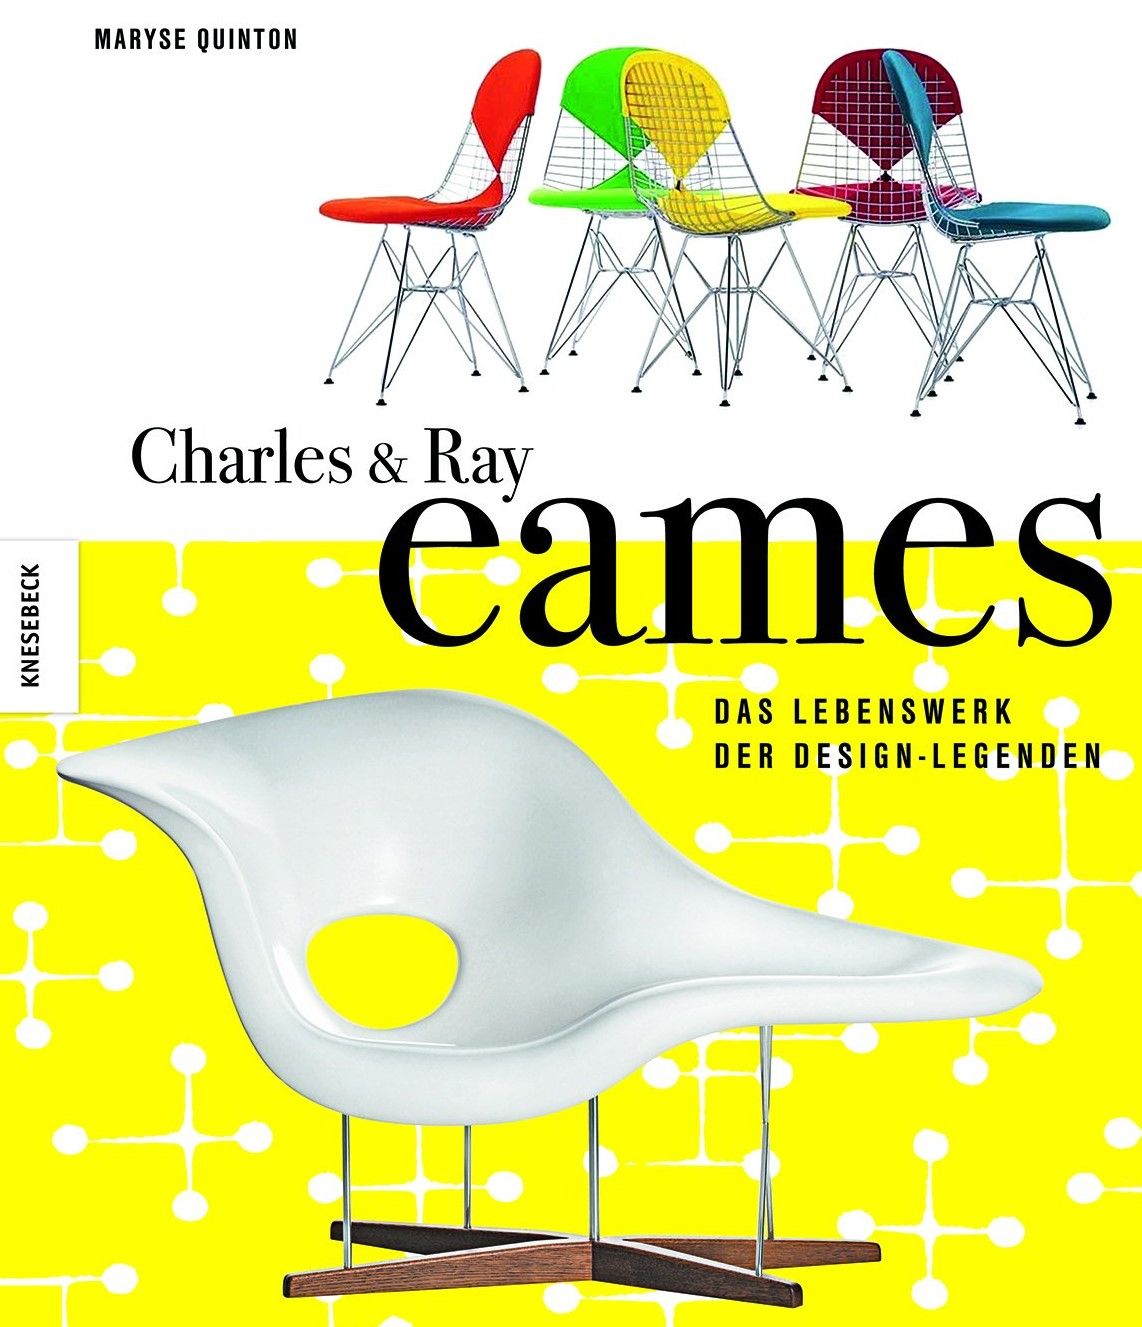 Charles & Ray Eames: Das Lebenswerk der Design-Legenden Knesebeck Verlag, 2015 - Maryse Quinton